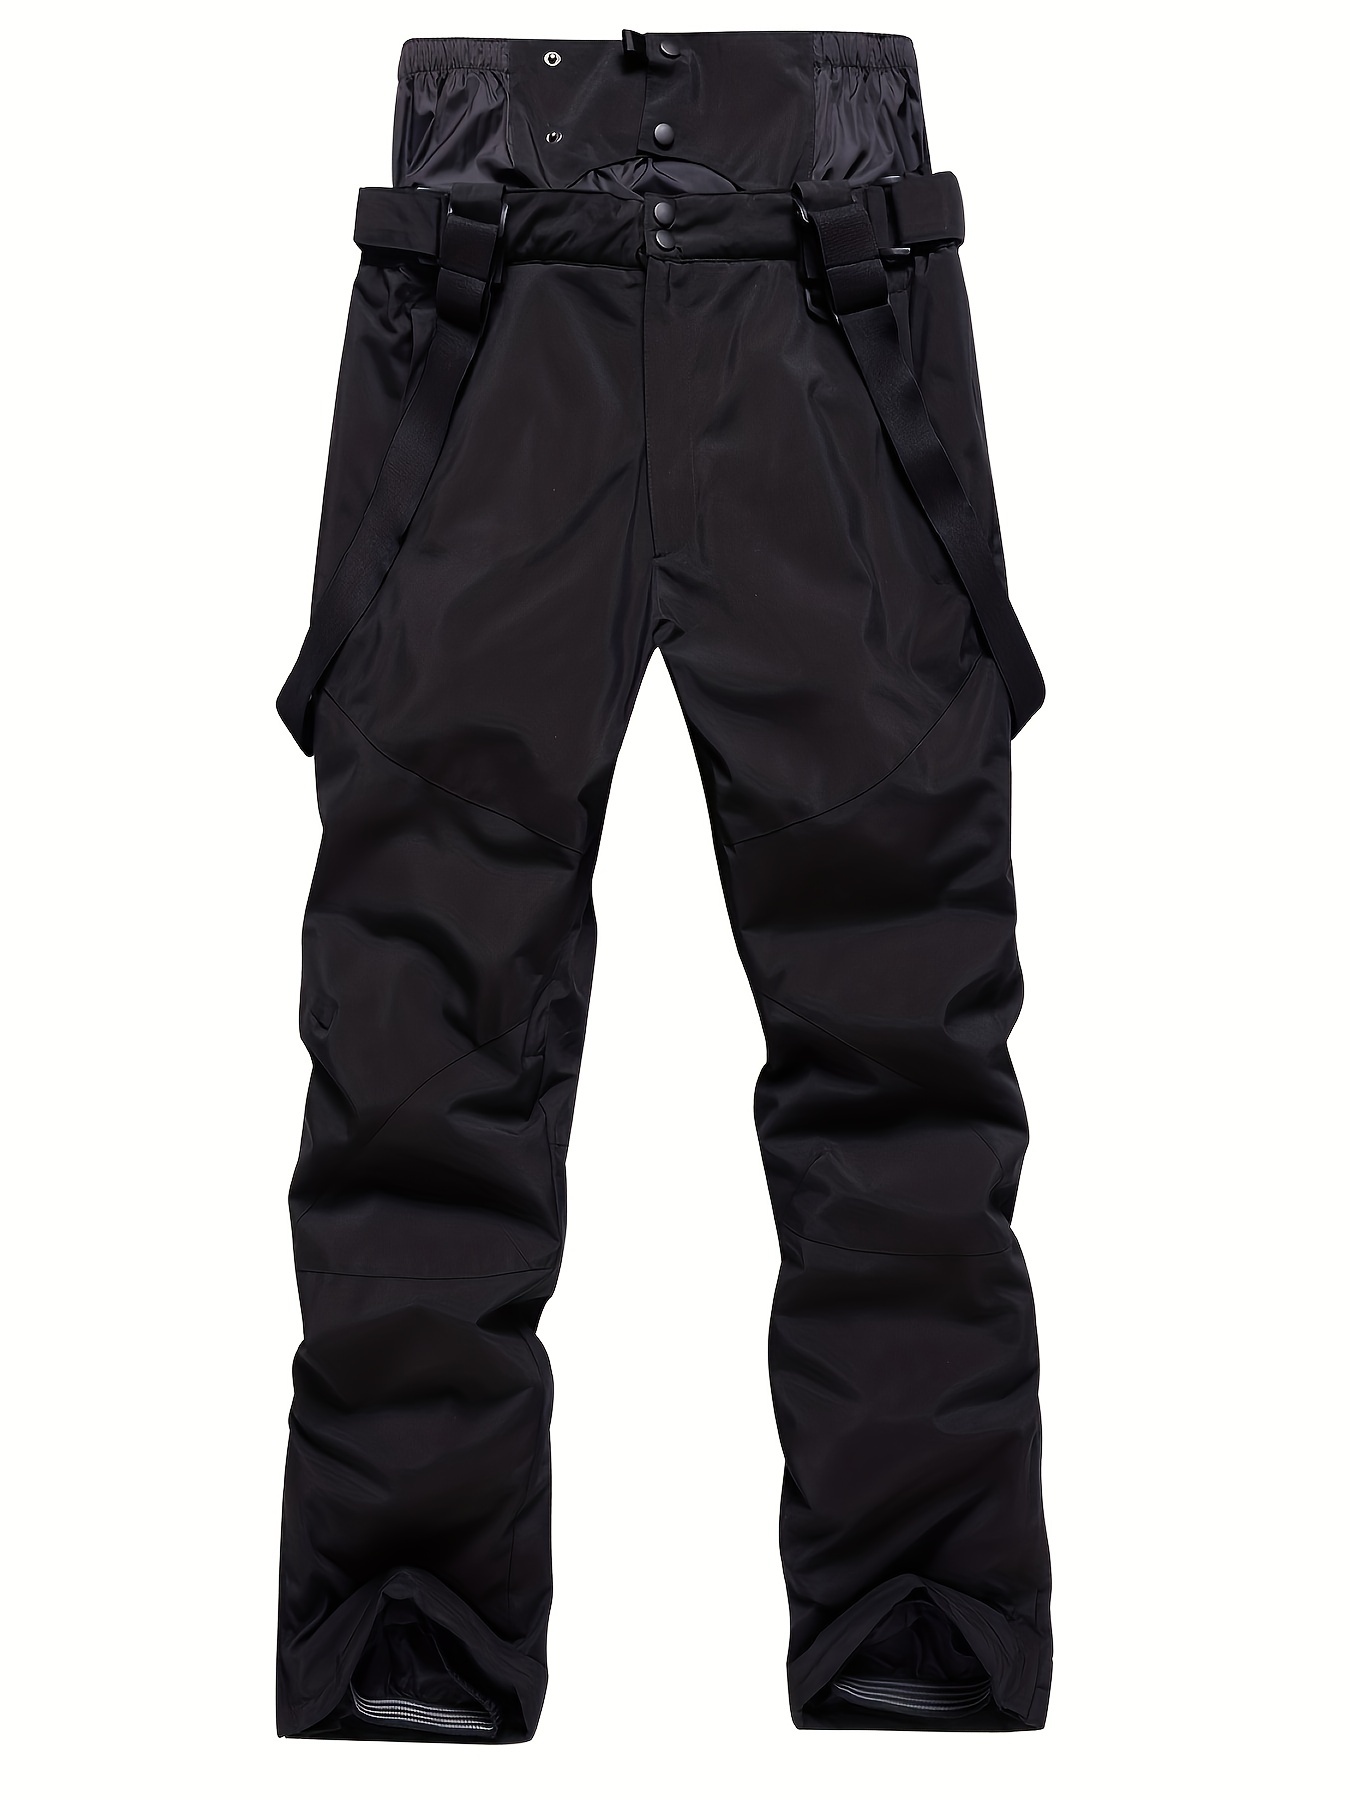 Women's Snow Pants, Camo Pattern Thermal Snow Bibs With Belt, Muti Pockets  Waterproof & Windproof Ski & Snowboard Bib Pants